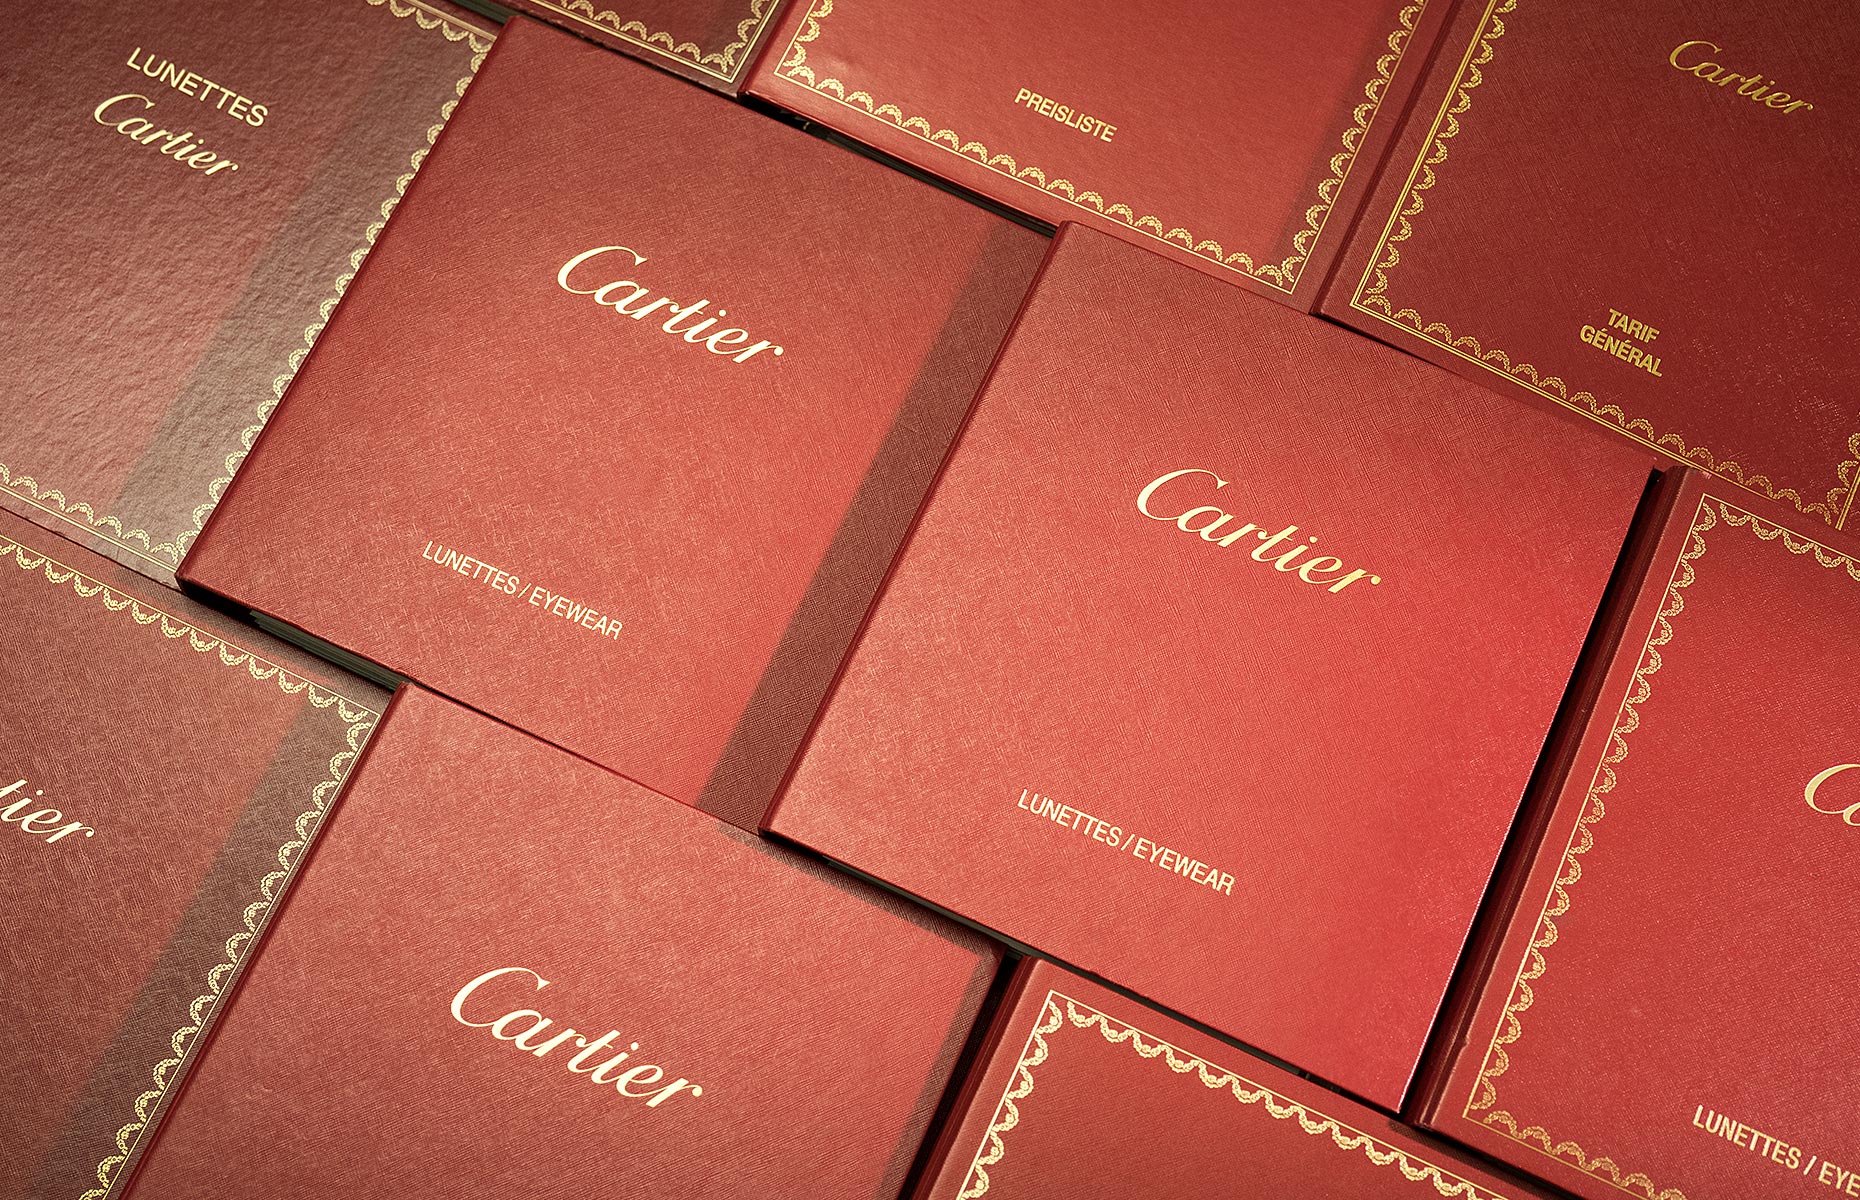 Kính Cartier catalogue